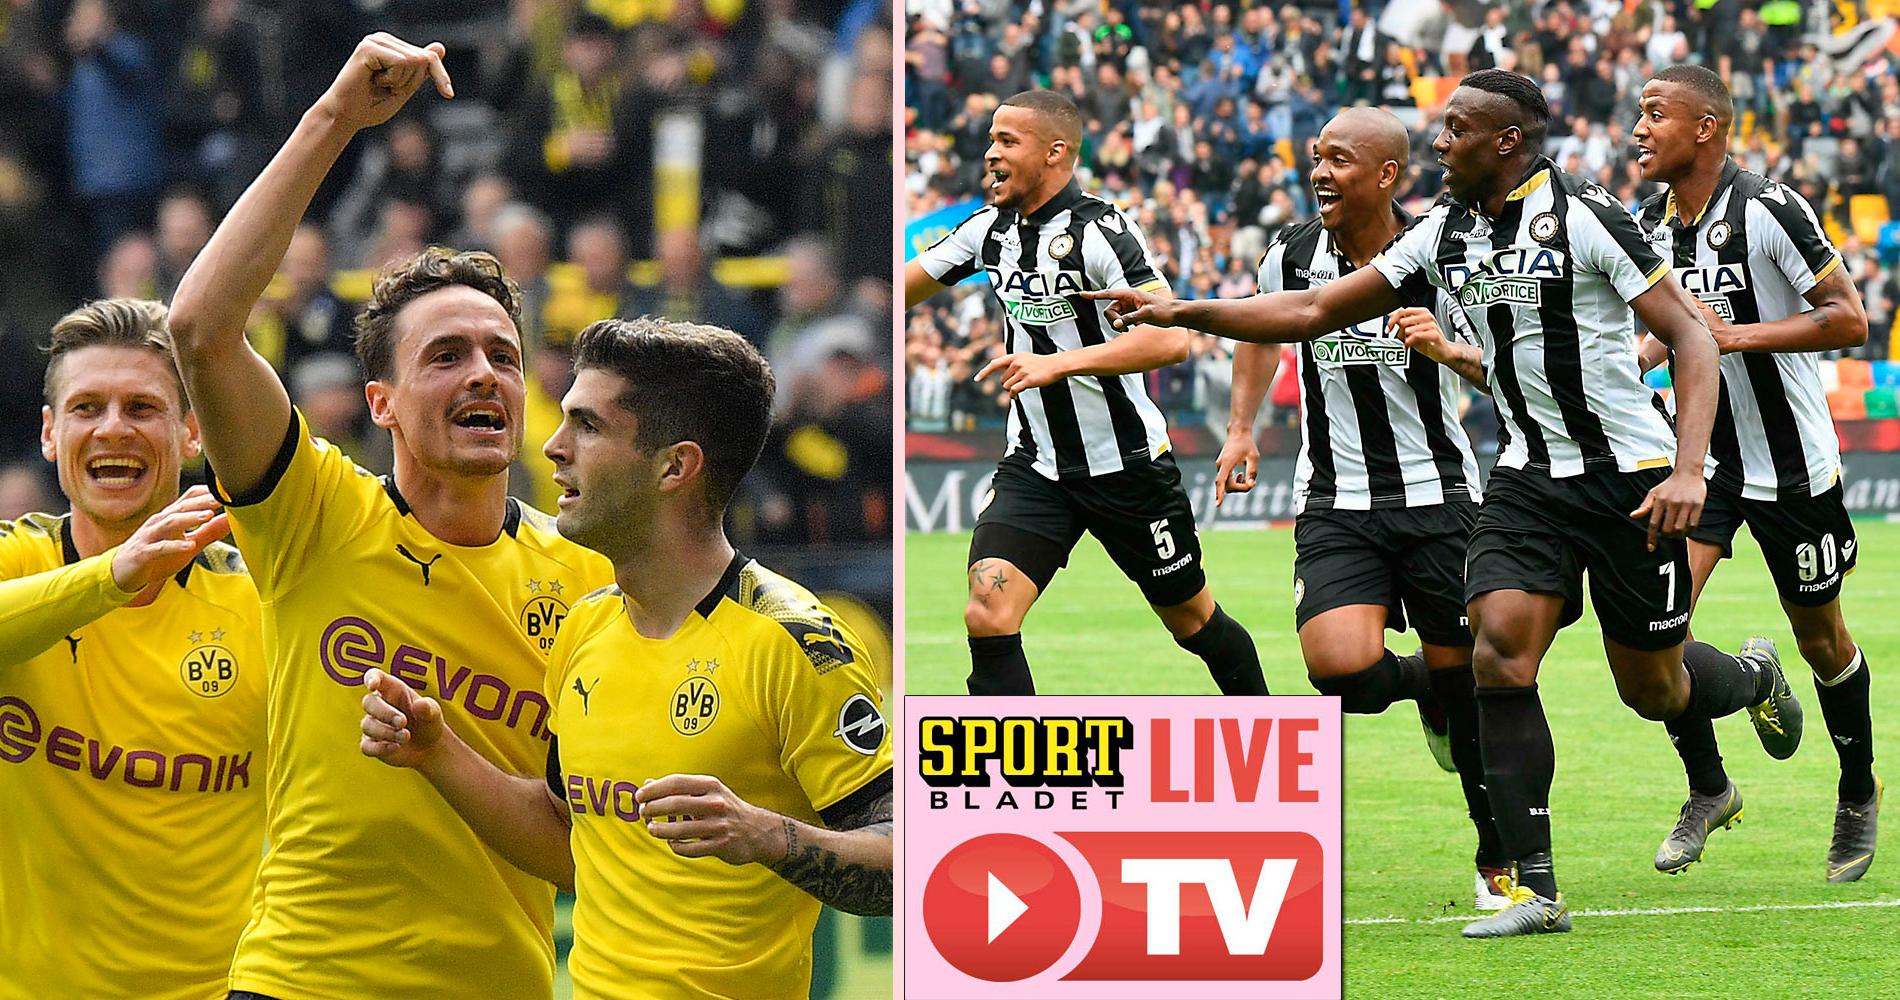 Lördag 27 juli kl 17.00: Se Borussia Dortmund-Udinese live här